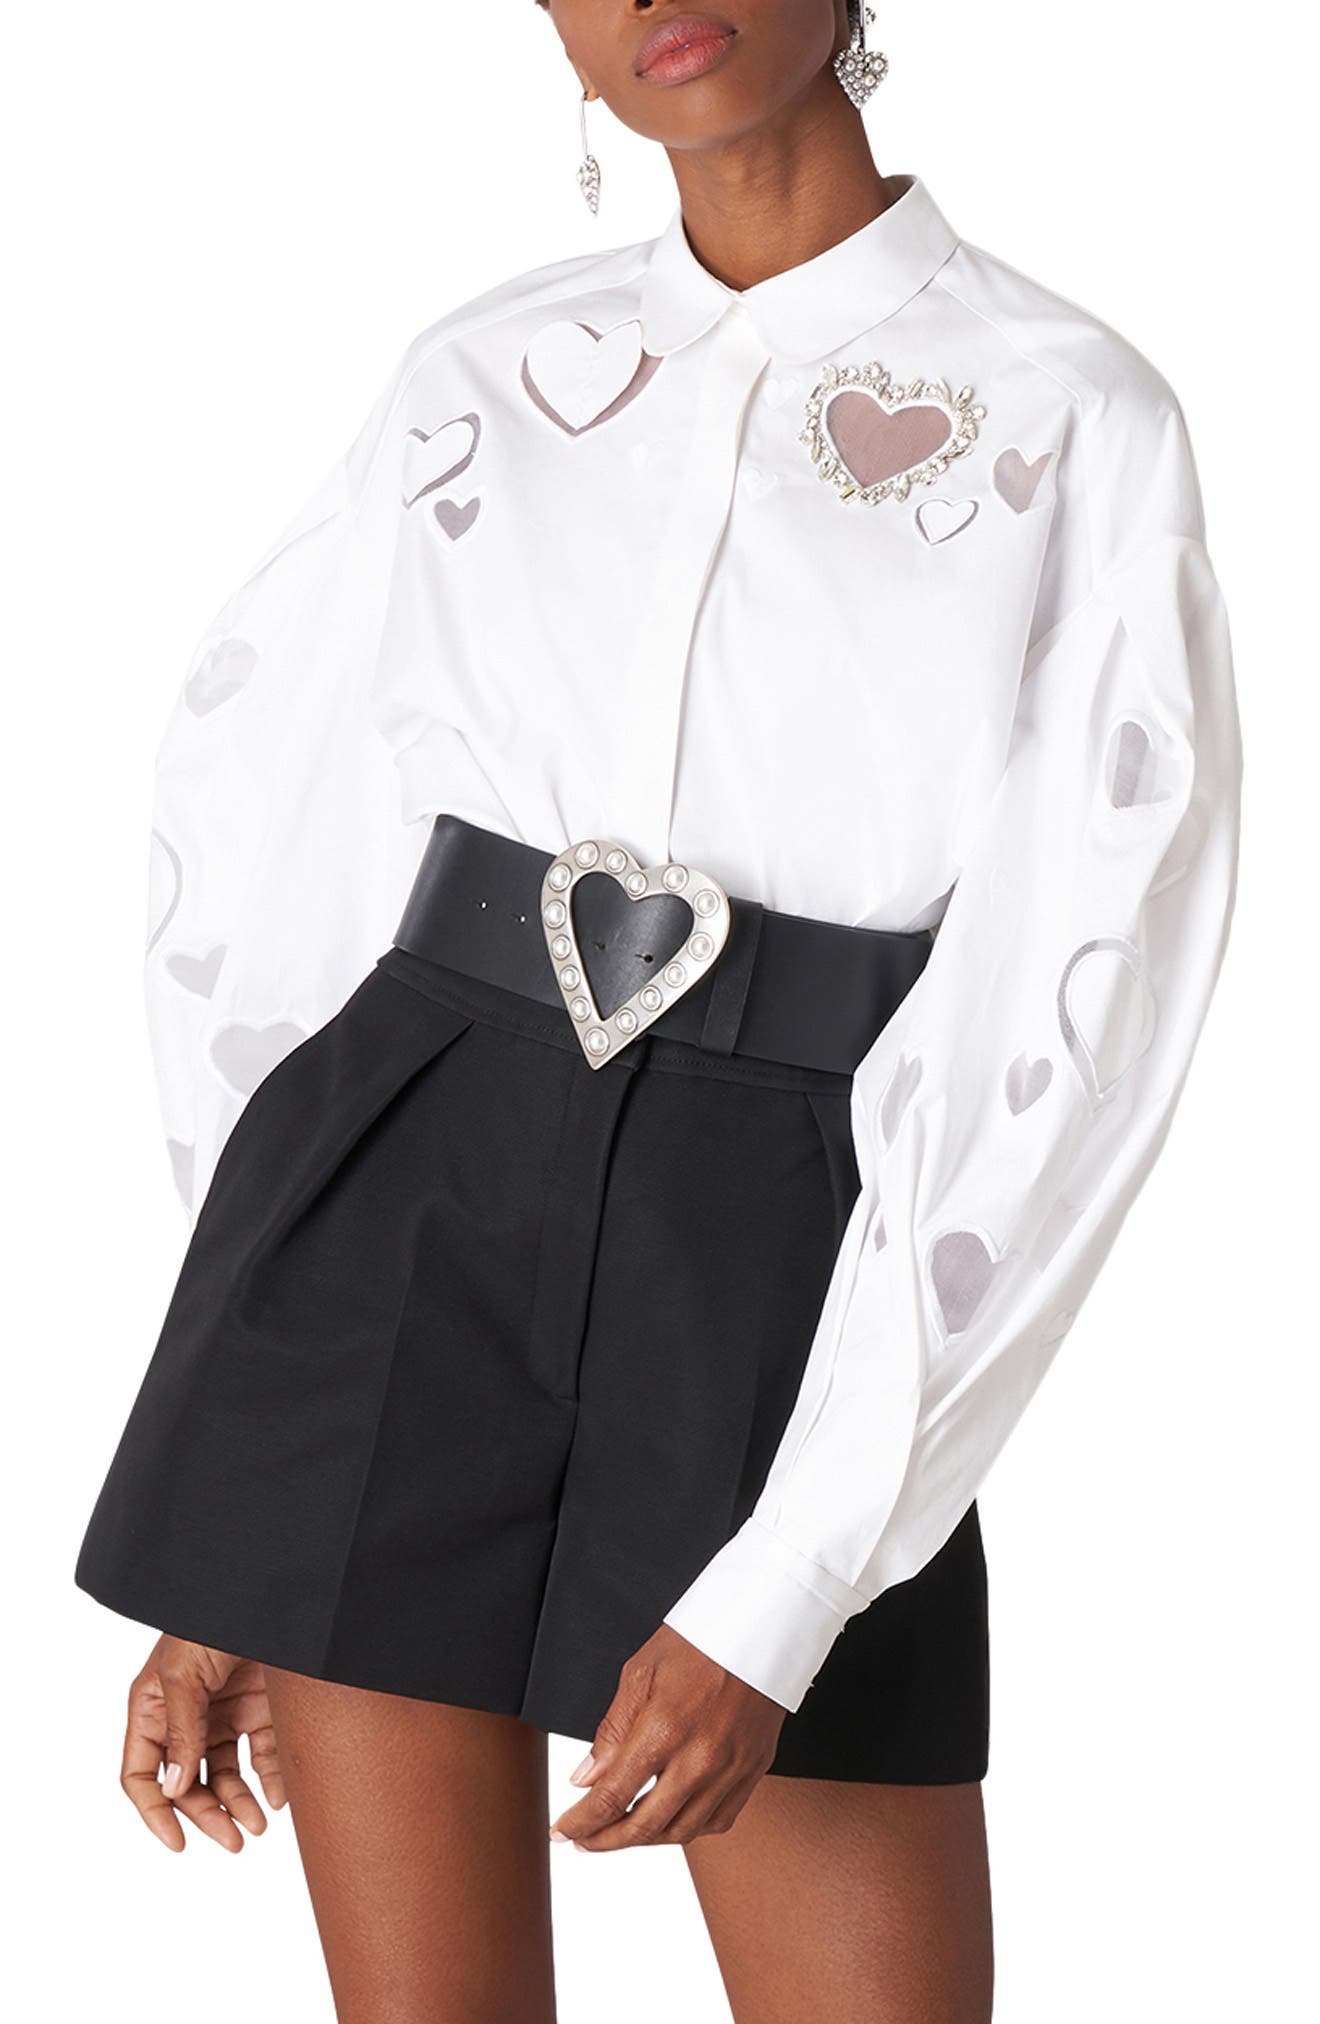 Carolina Herrera Cutout Heart Stretch Poplin Shirt in White at Nordstrom, Size 6